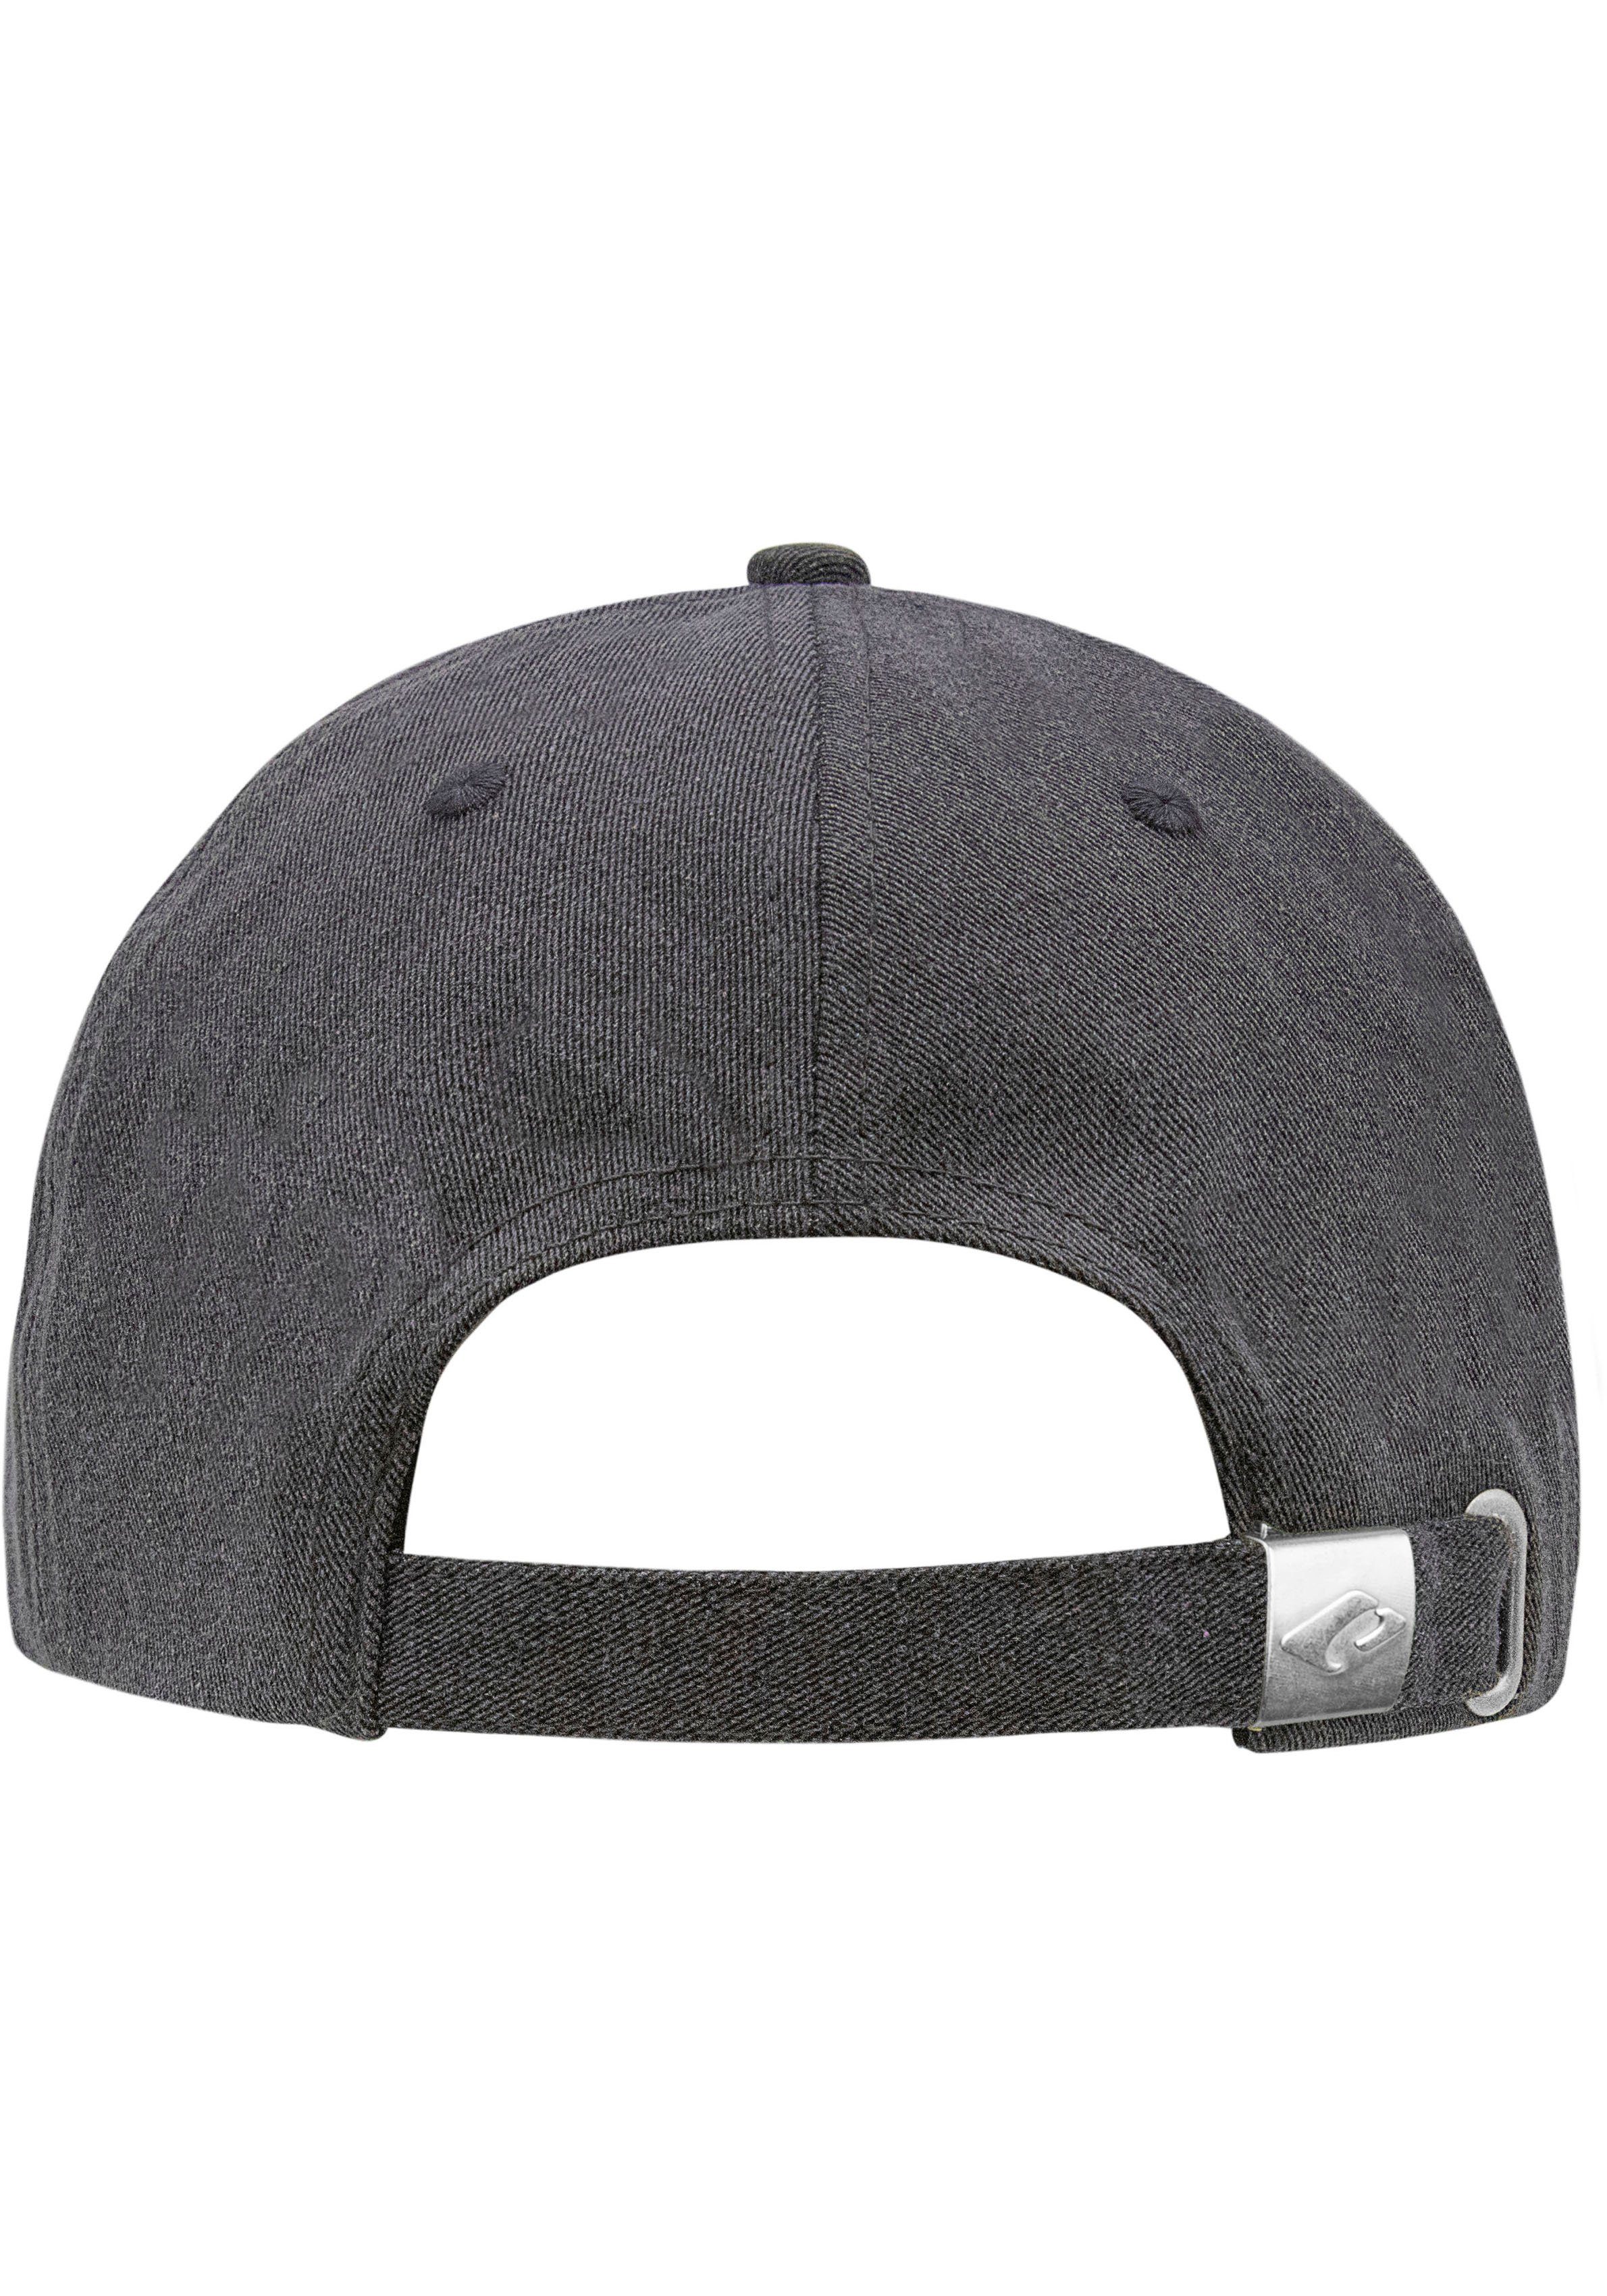 Baseball Hat Arklow Cap dunkelgrau chillouts